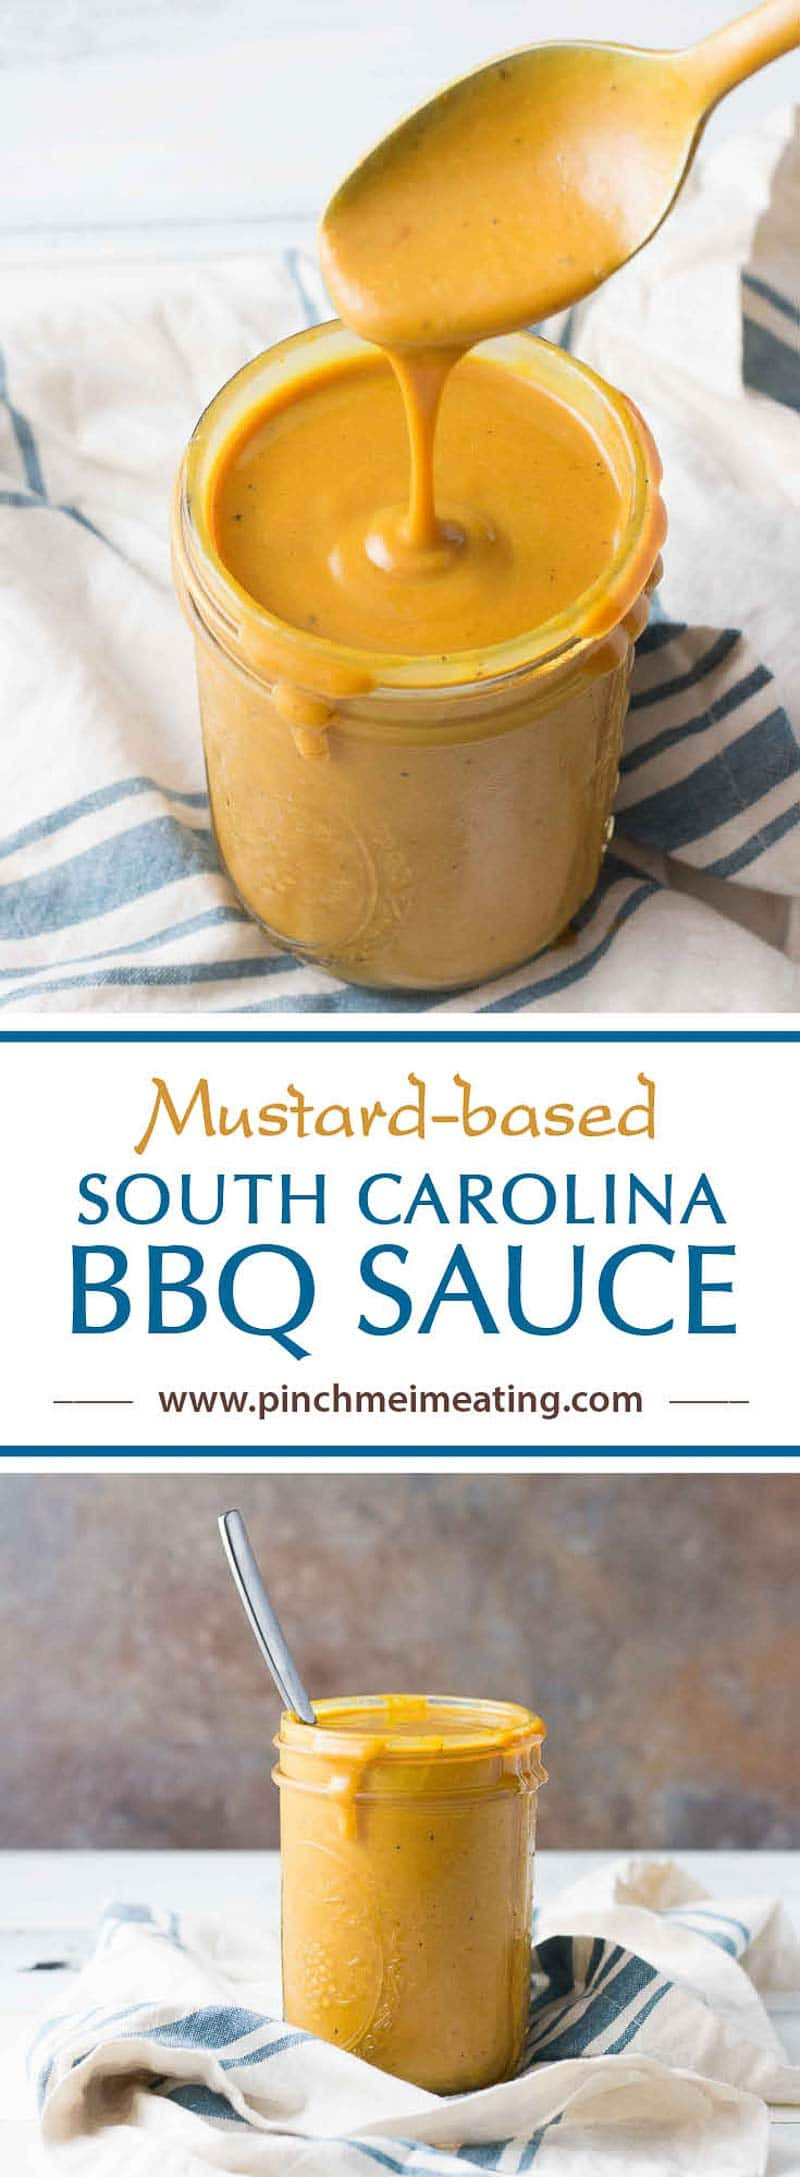 South Carolina Bbq Sauce
 Mustard Based South Carolina BBQ Sauce